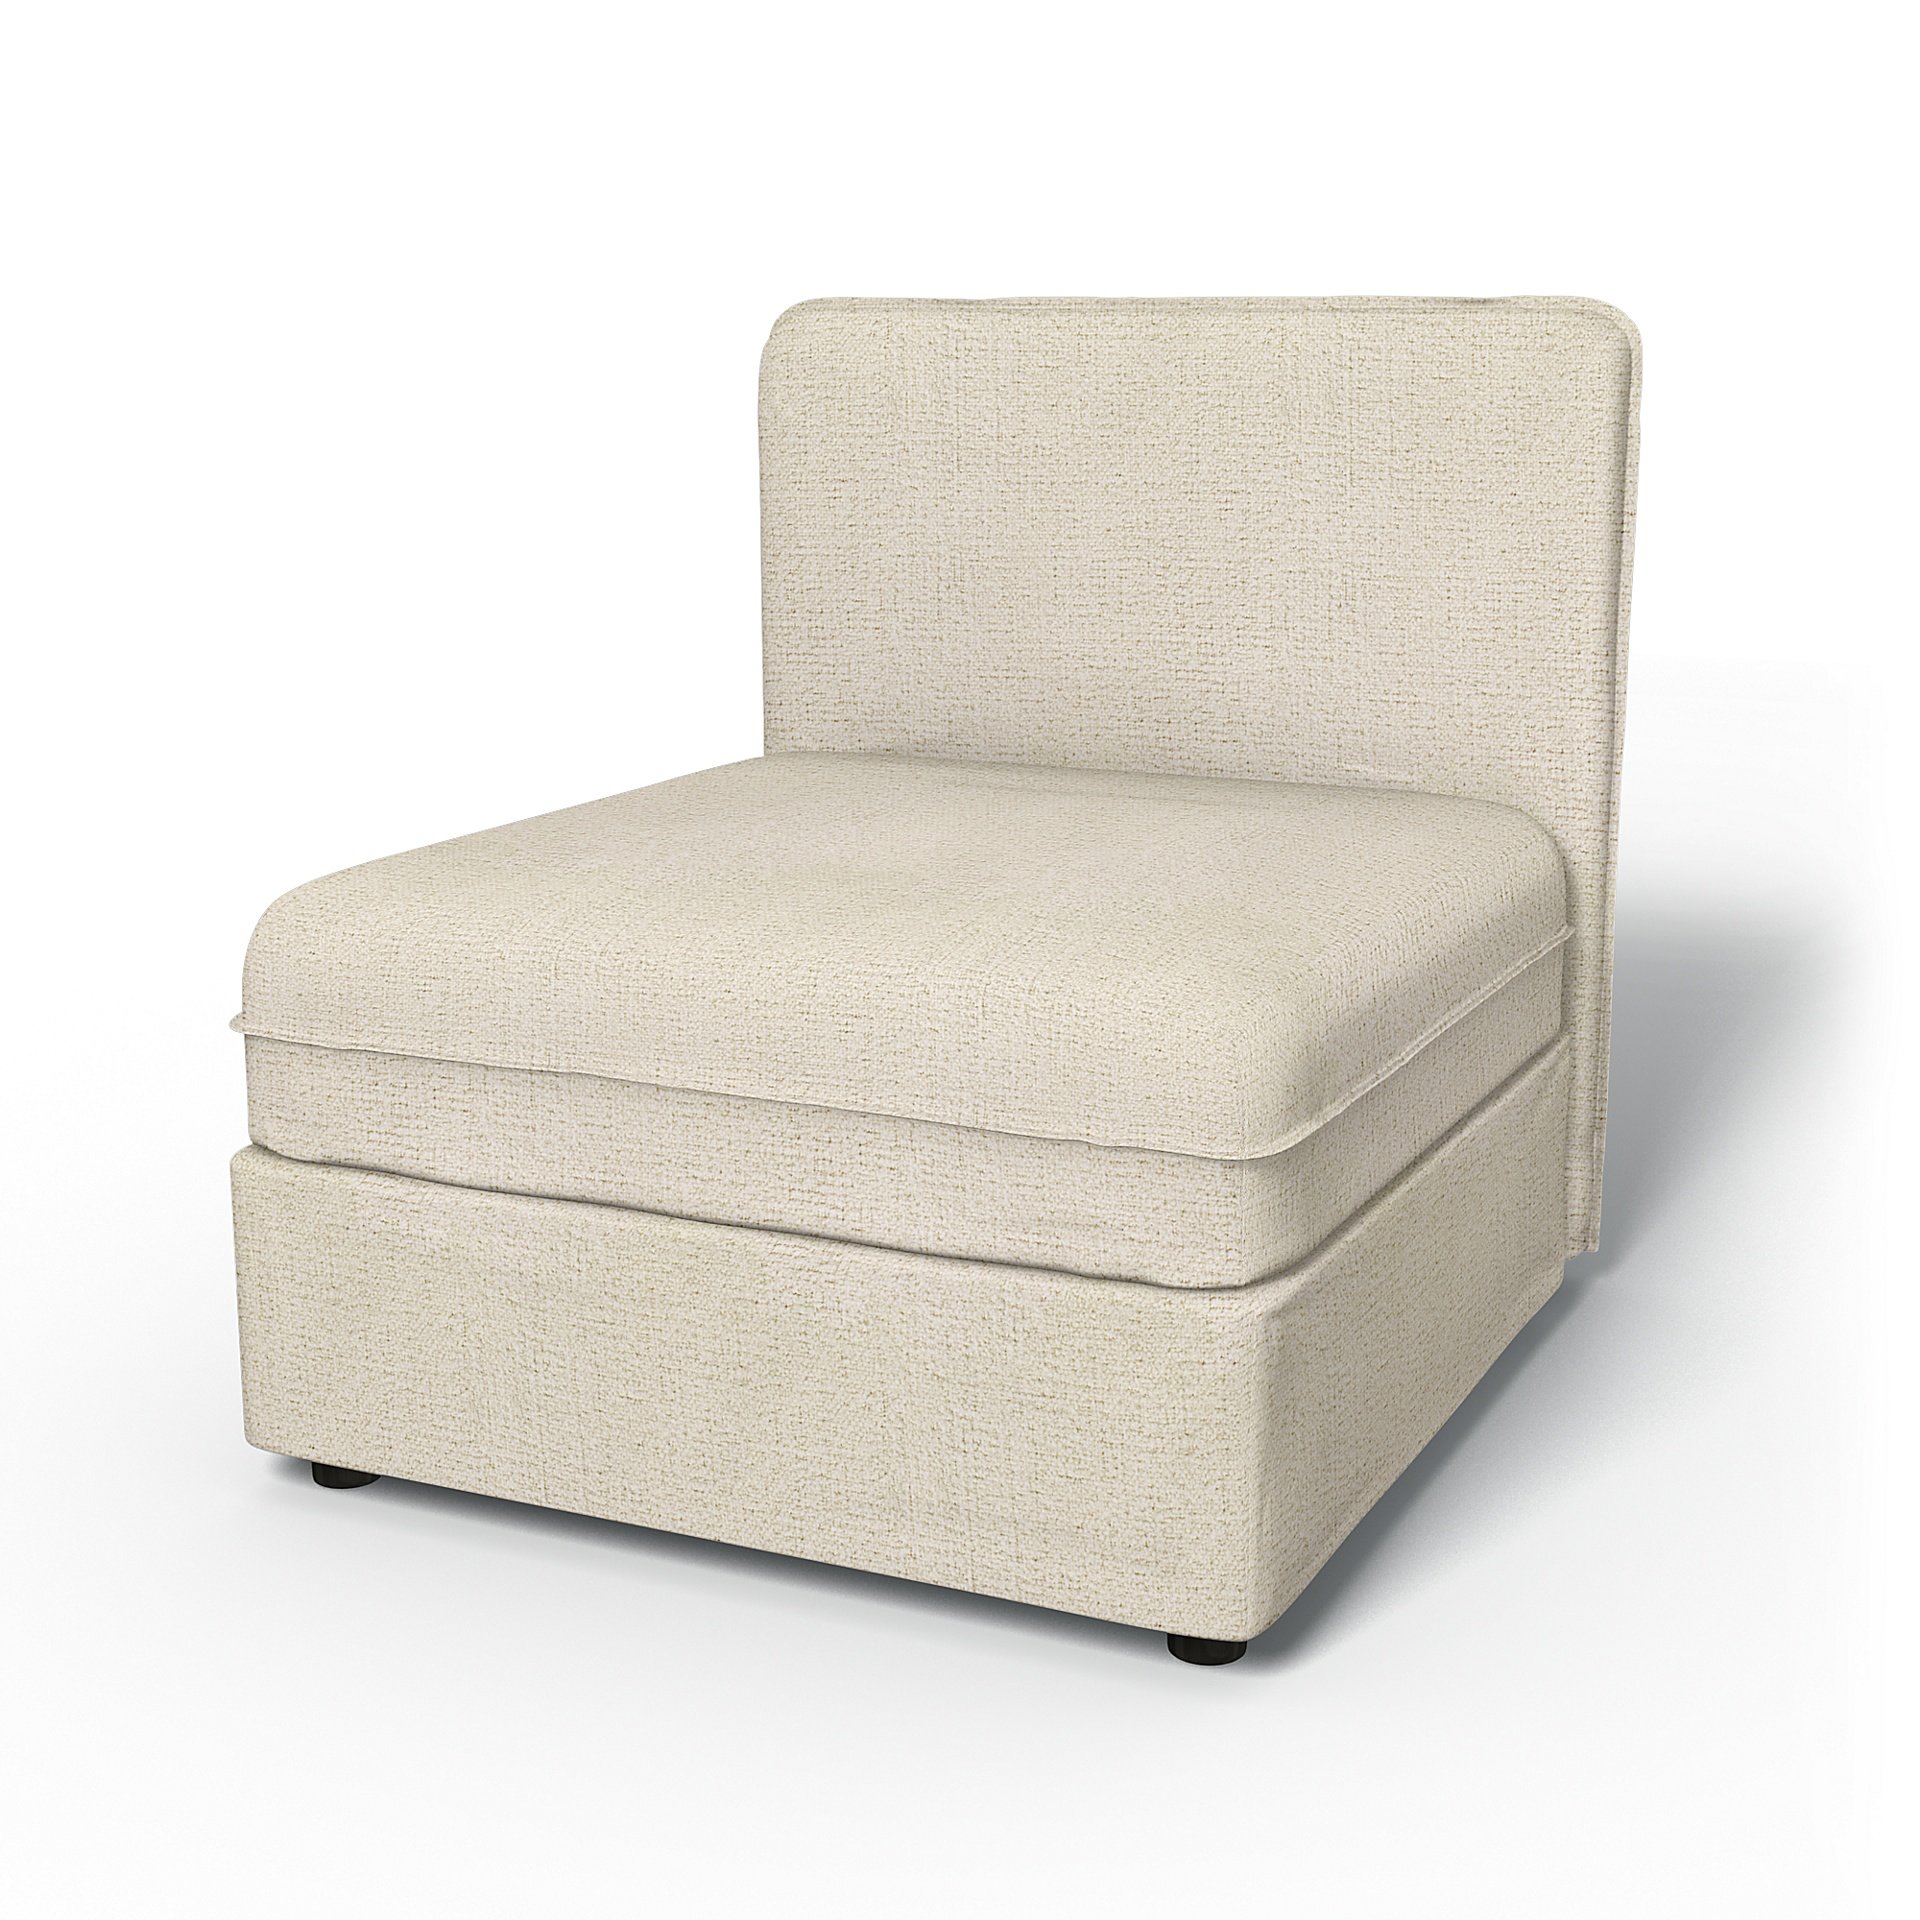 IKEA - Vallentuna Seat Module with Low Back Cover 80x80cm 32x32in, Ecru, Boucle & Texture - Bemz